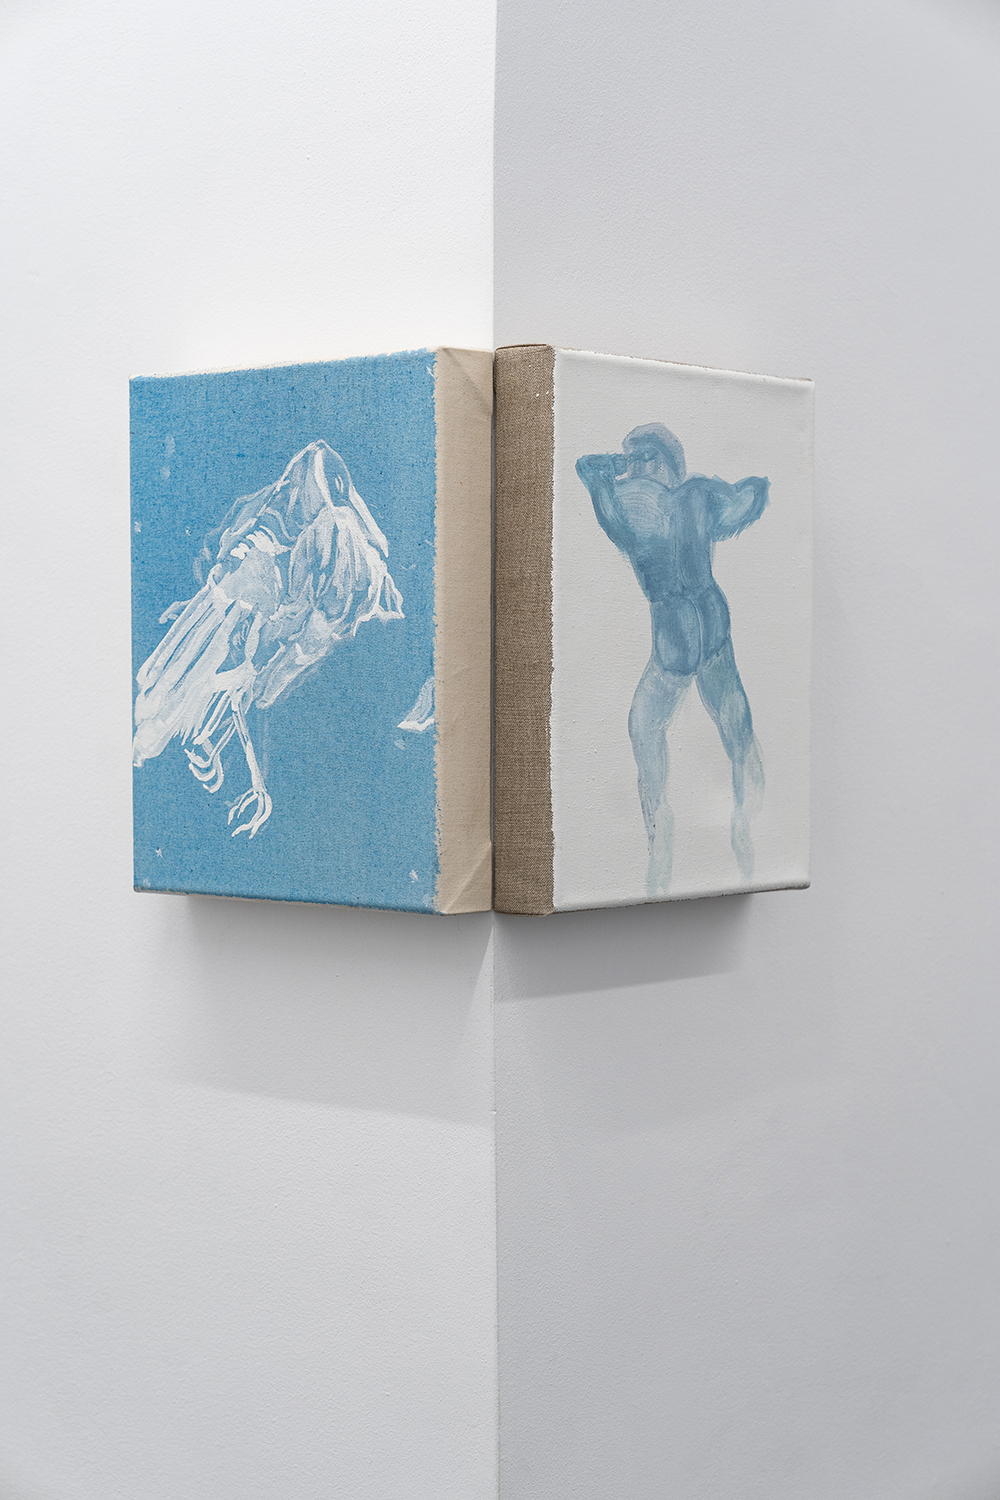 Lexia Hachtmann, Rabe, 2021 Tempera on Canvas, 30 x 25 cm ; Lexia Hachtmann, Mann, 2021 Tempera on Canvas, 30 x 25 cm